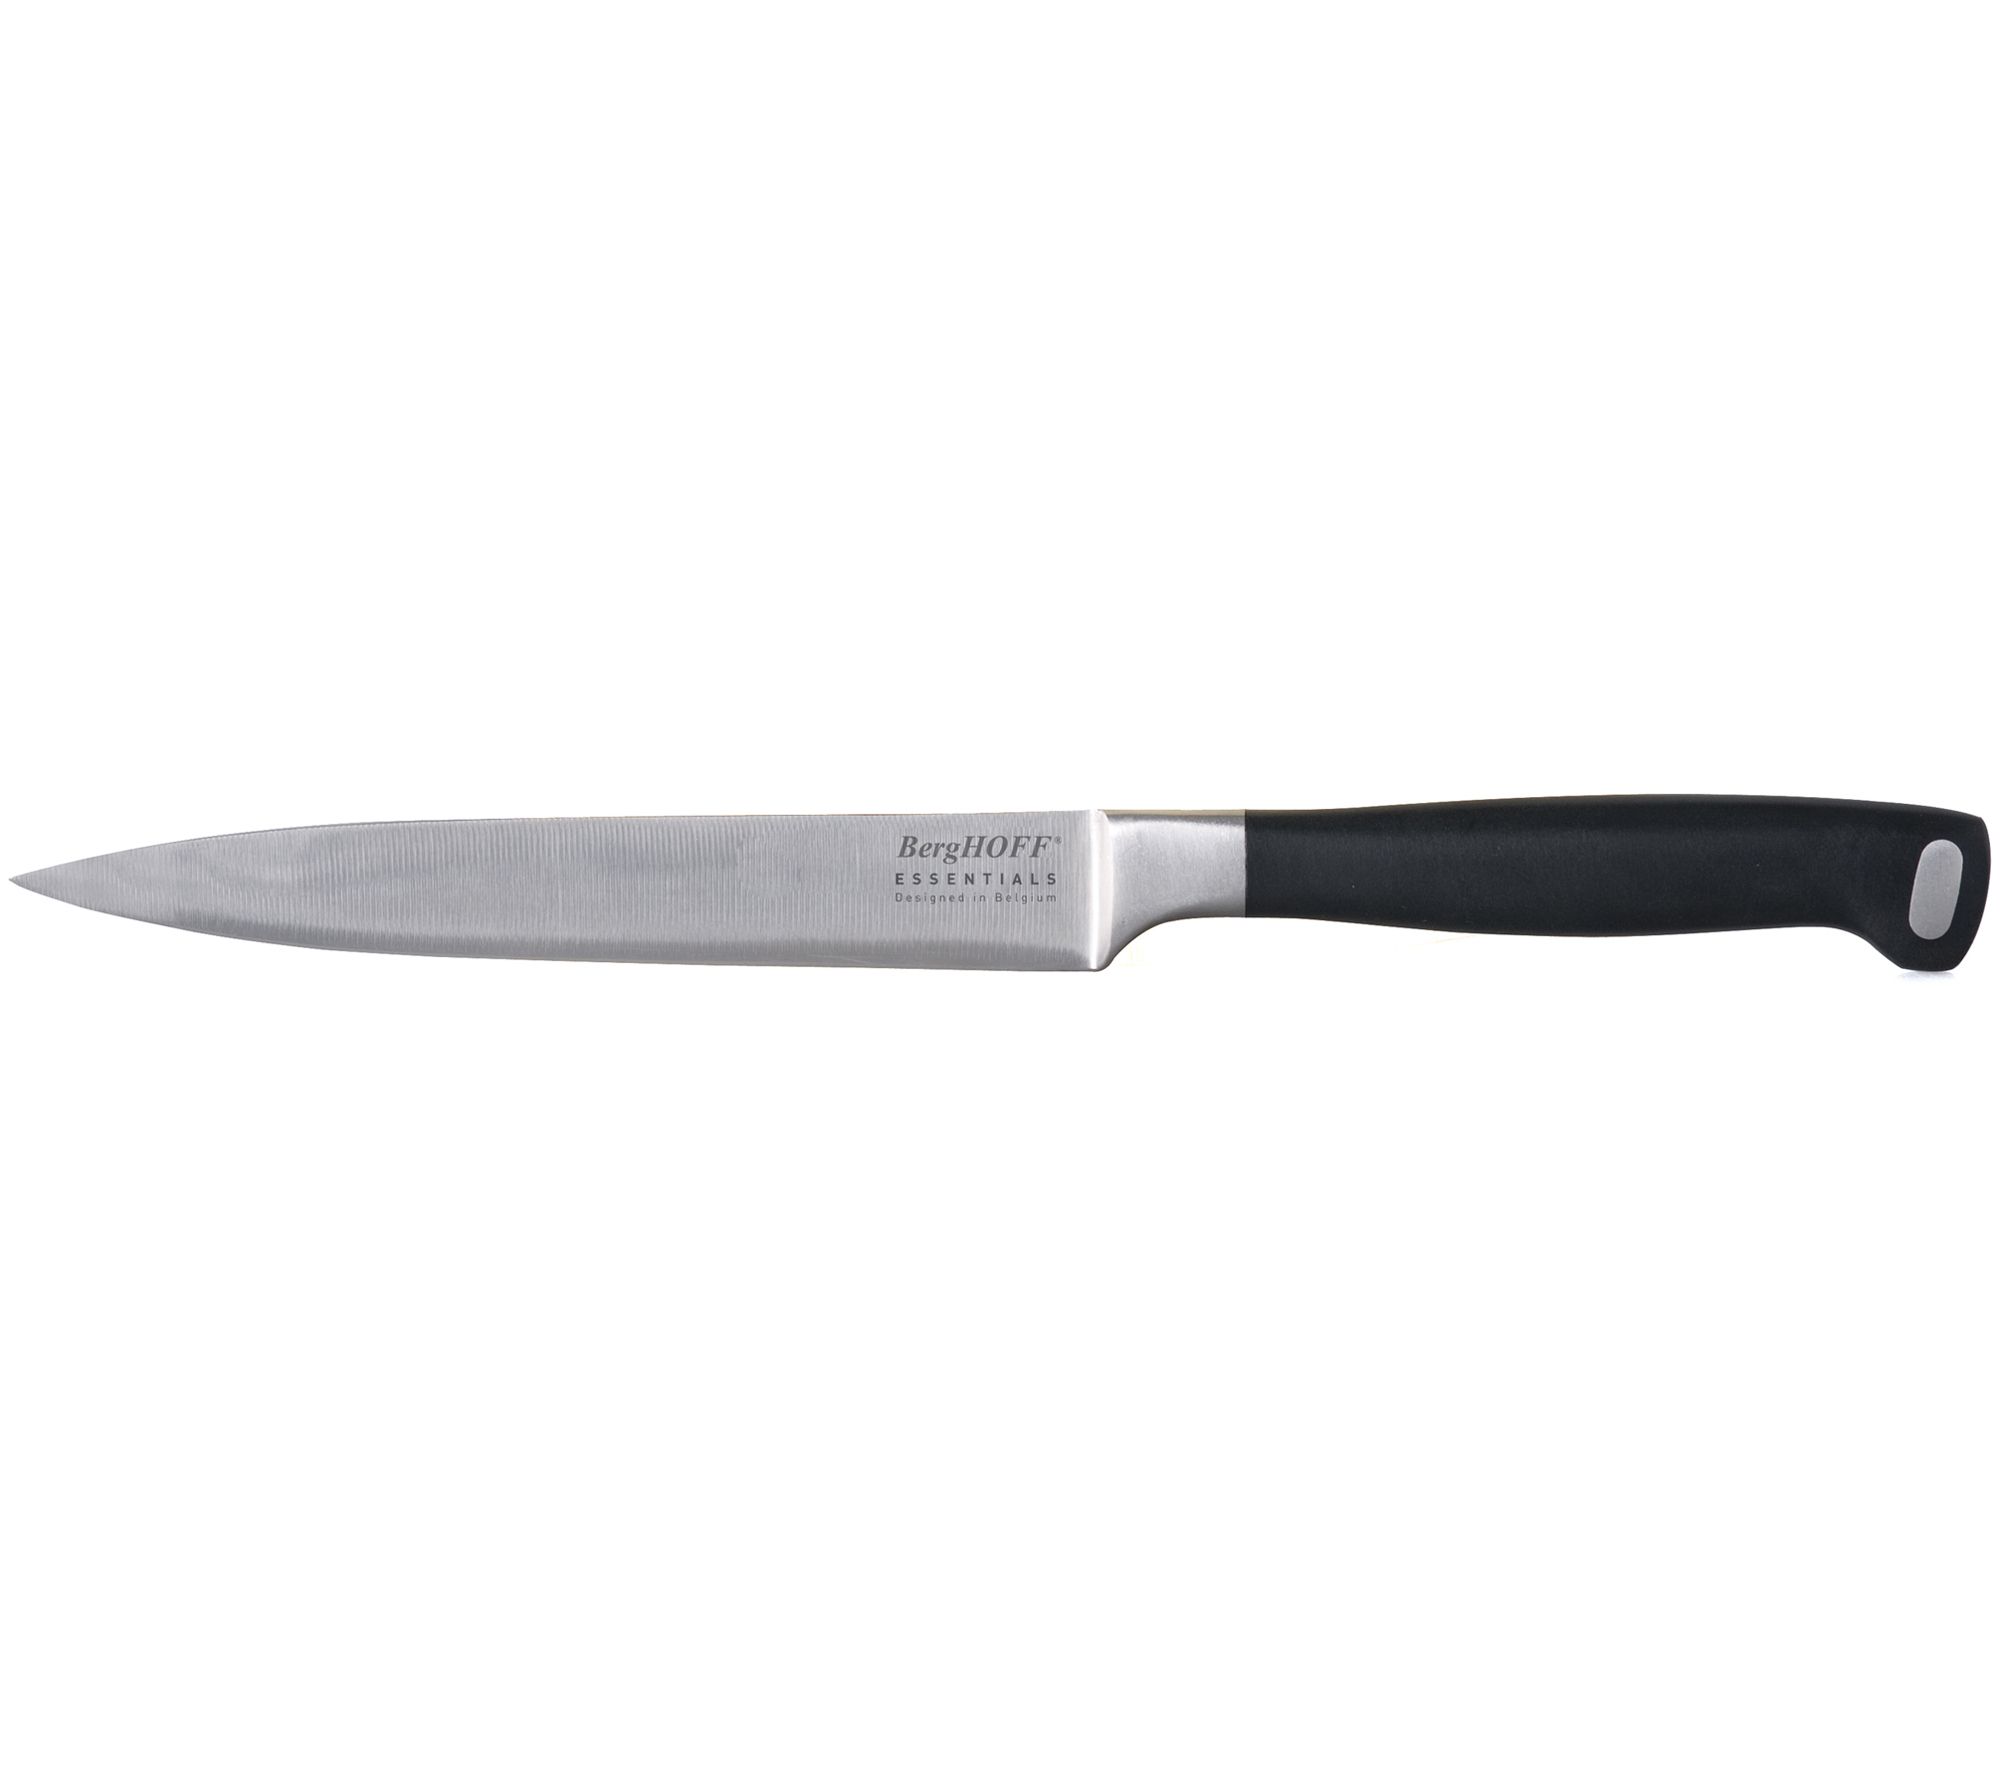 Oster Godfrey 5-Piece Black Blade Stainless Steel Knife Set